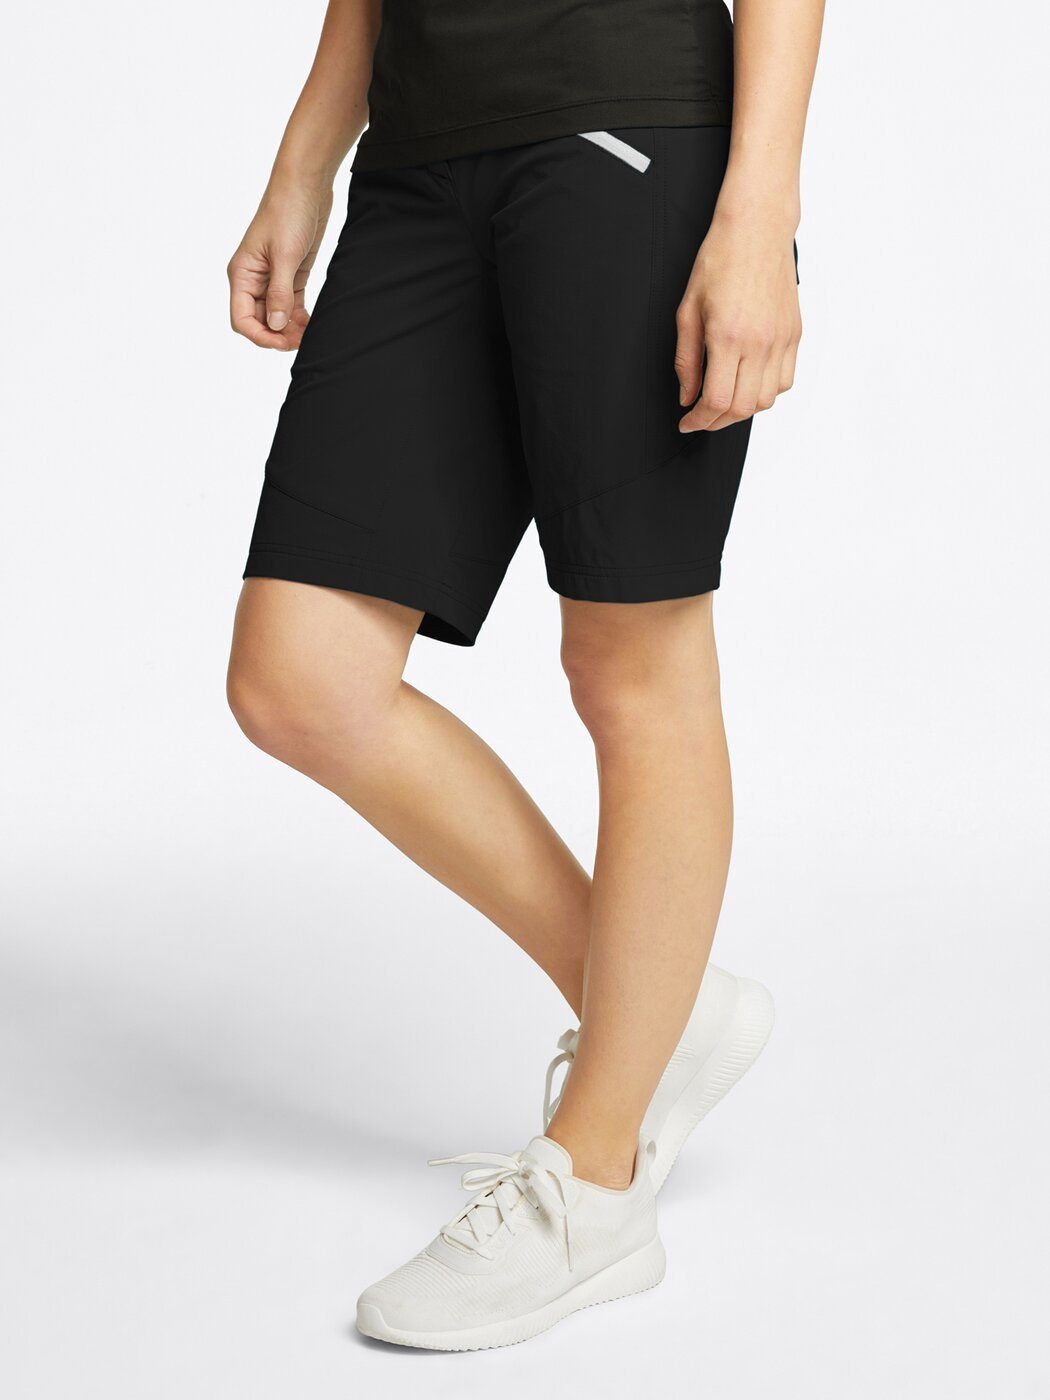 Ziener Shorts lady X-Function black.white NASITA (shorts) 1201